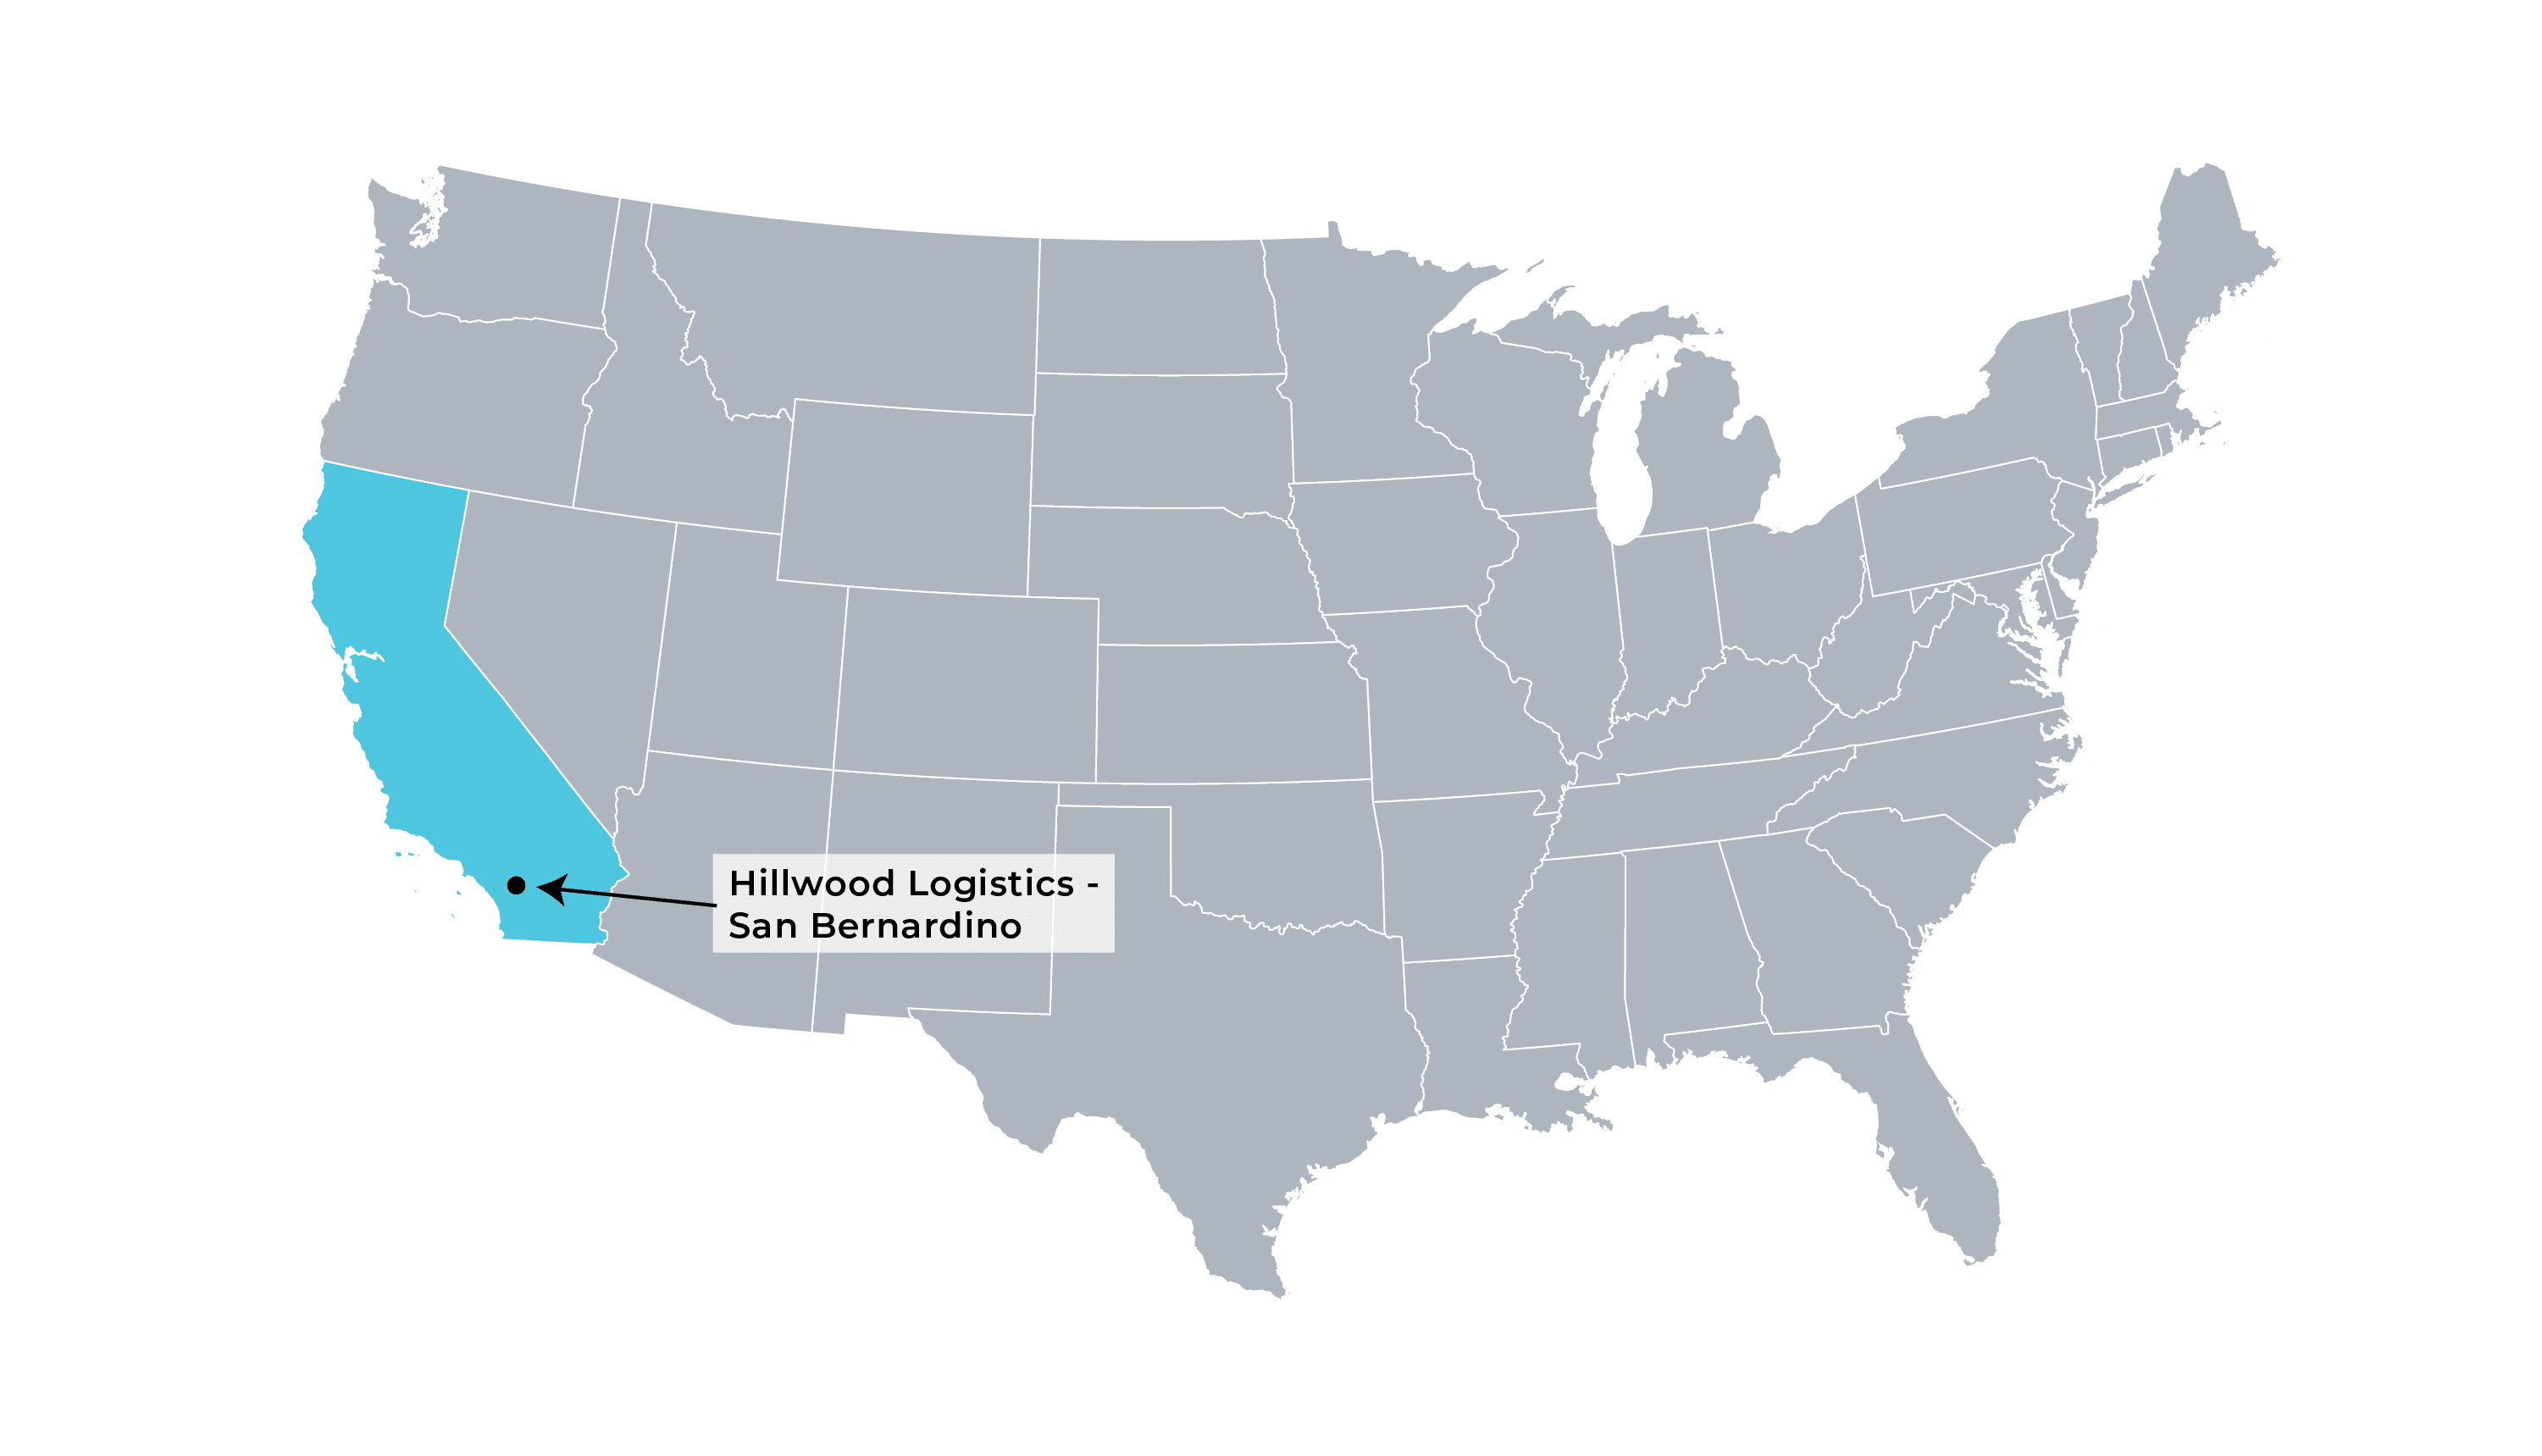 Map of USA, san bernardino CA highlighted